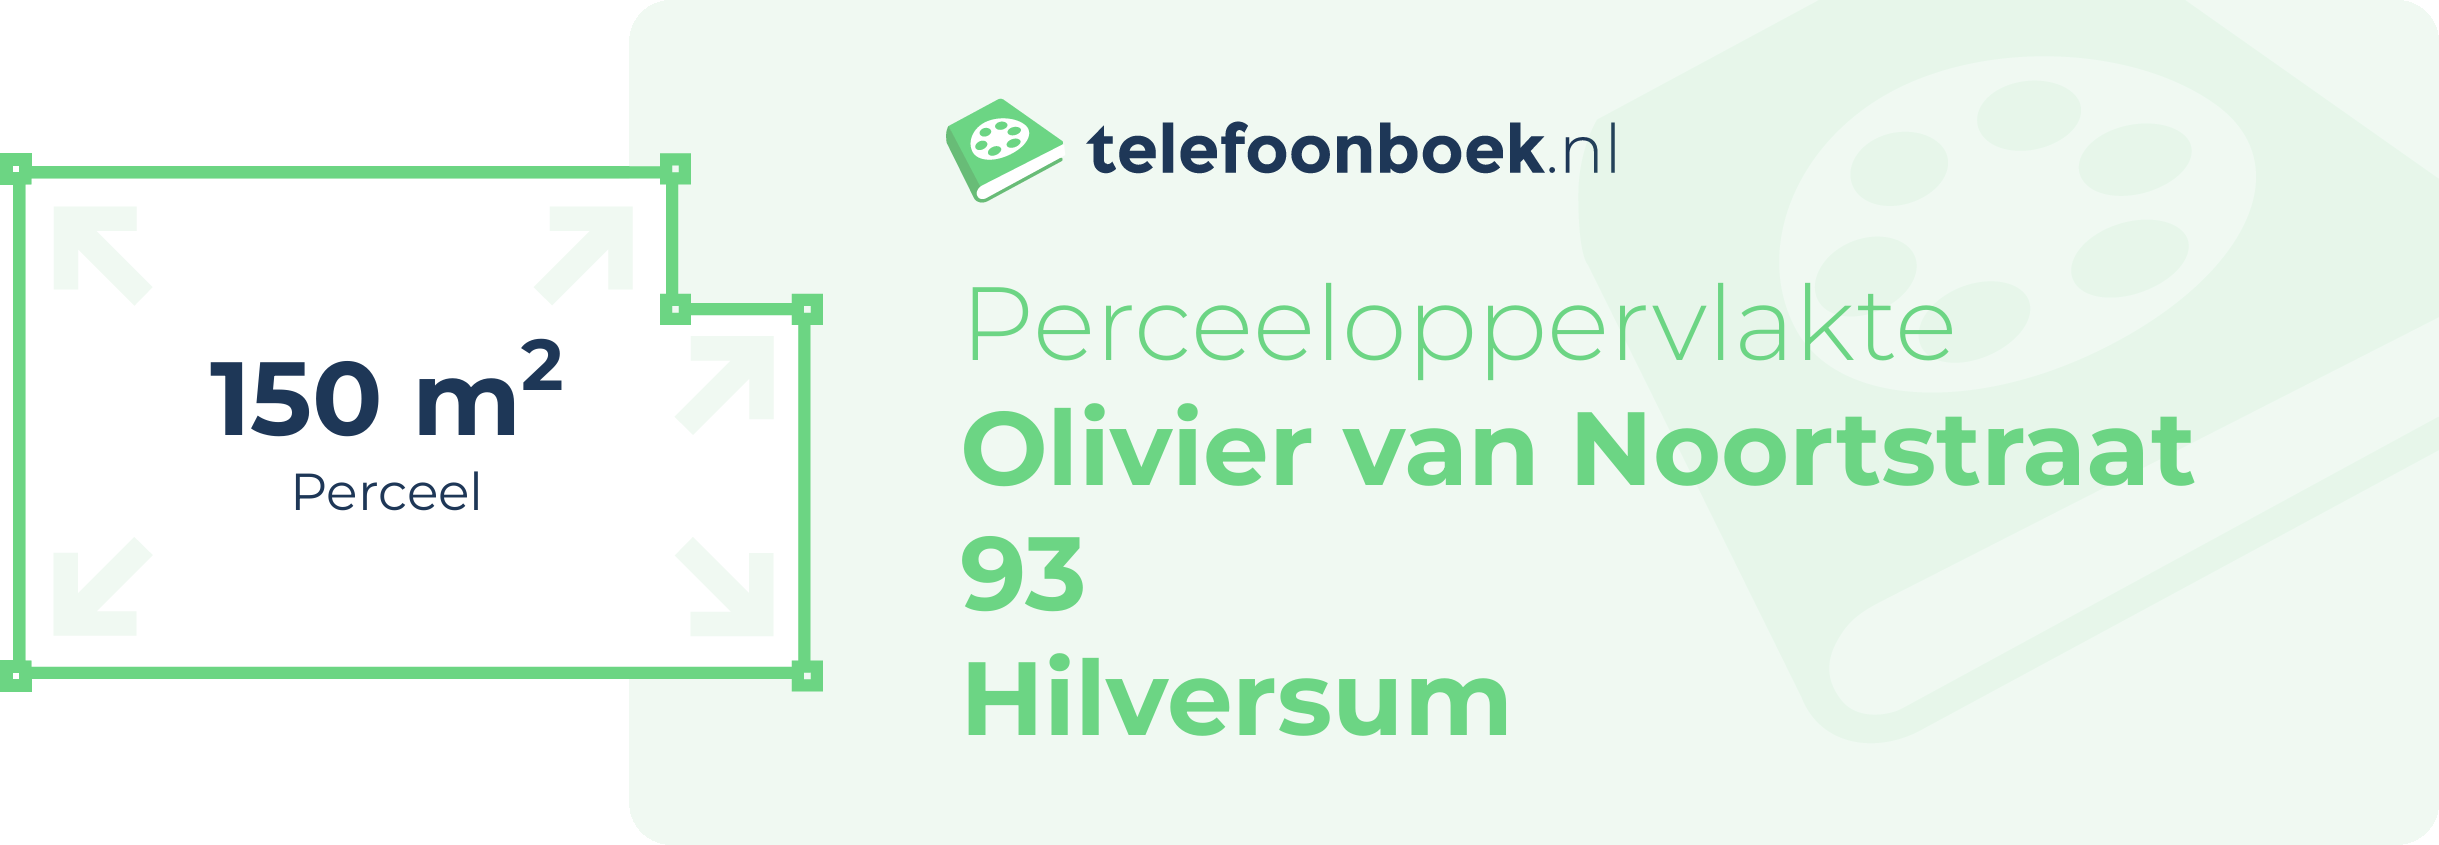 Perceeloppervlakte Olivier Van Noortstraat 93 Hilversum